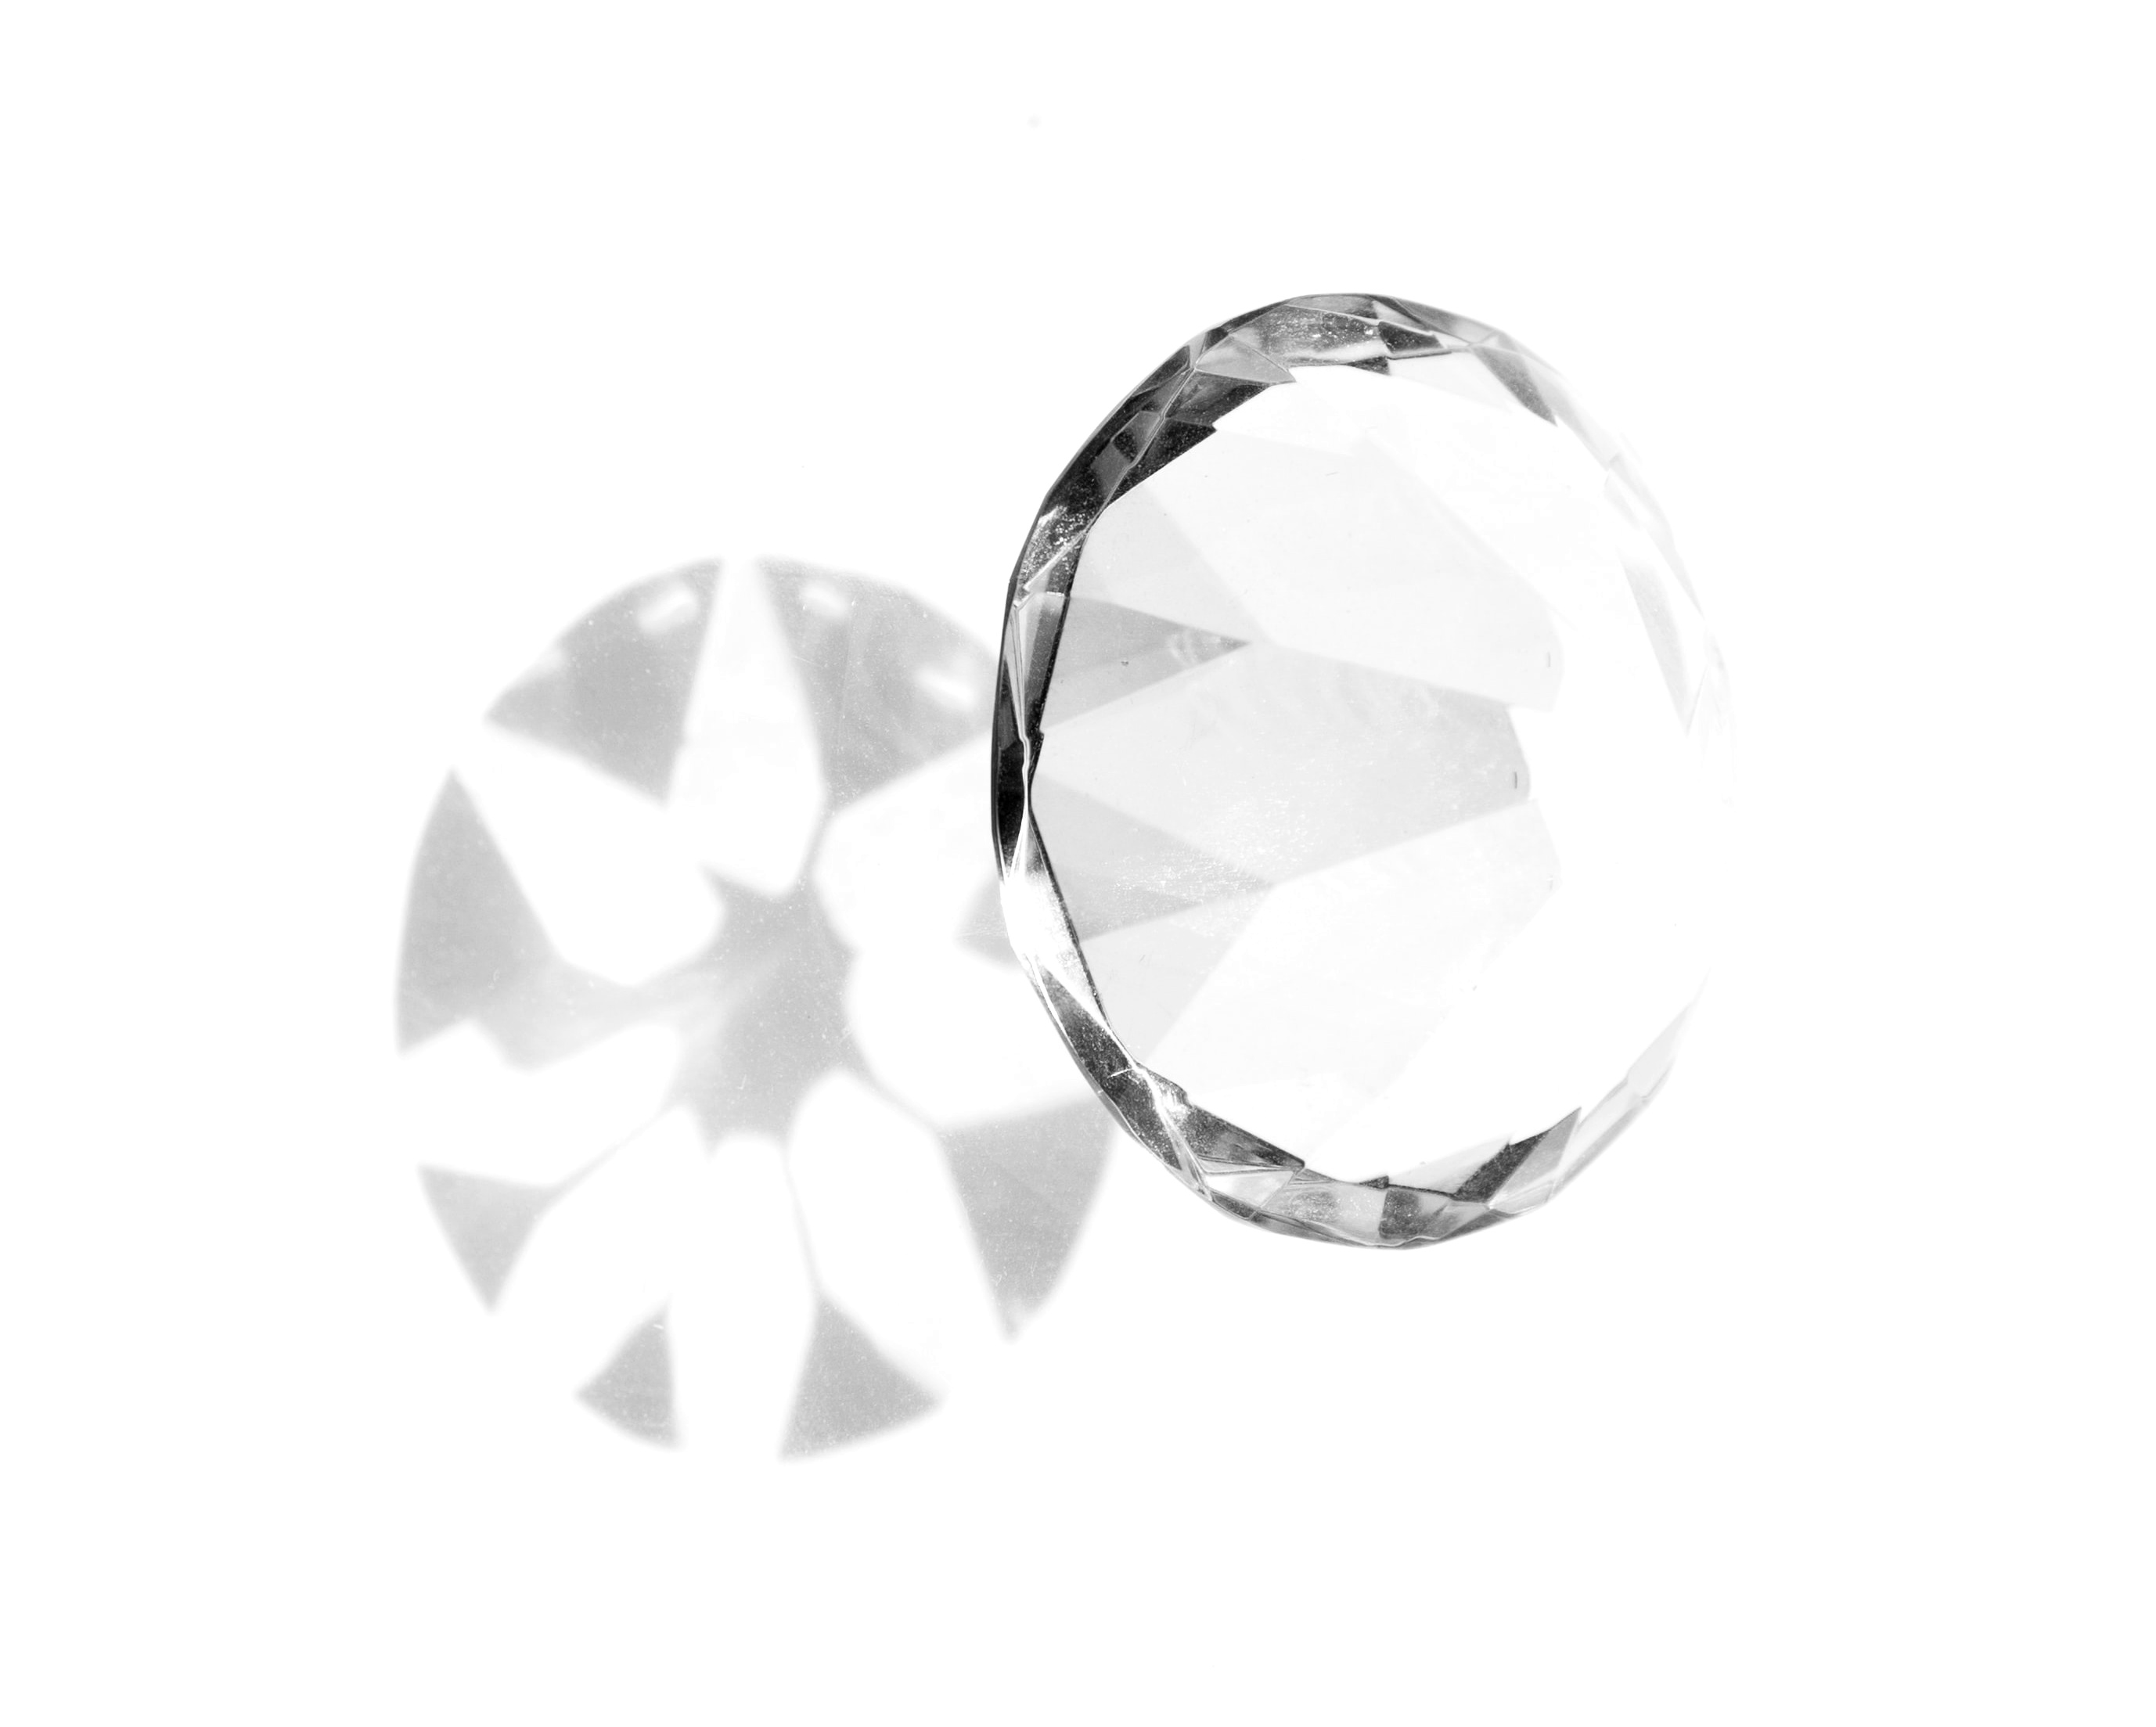 ROUGH DIAMOND- a clear cut case of a trade mark filed in bad faith